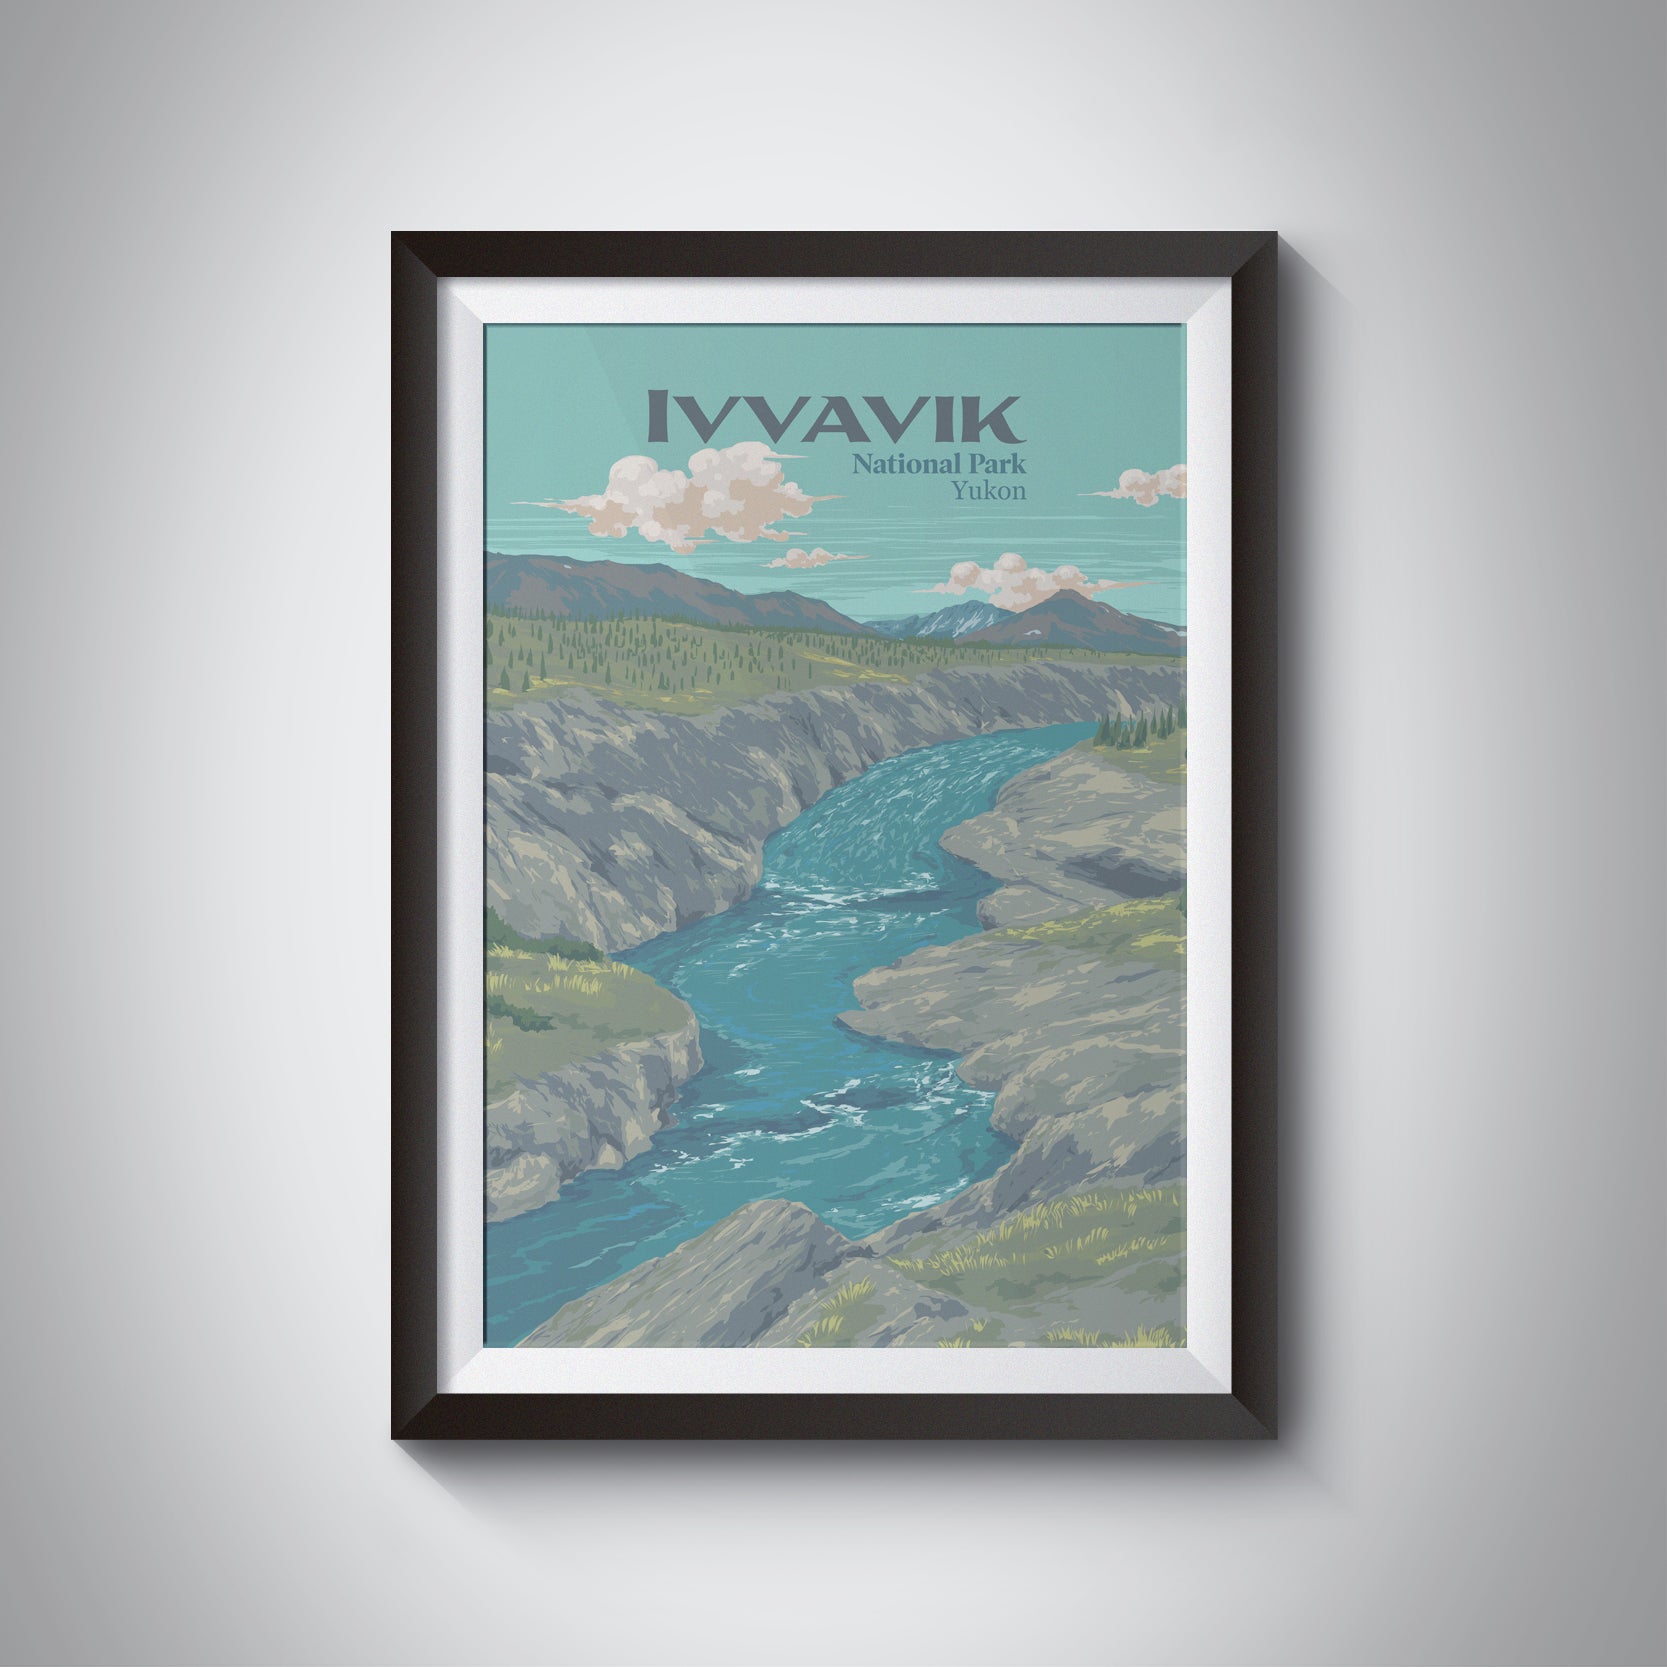 Ivvavik National Park Canada Travel Poster